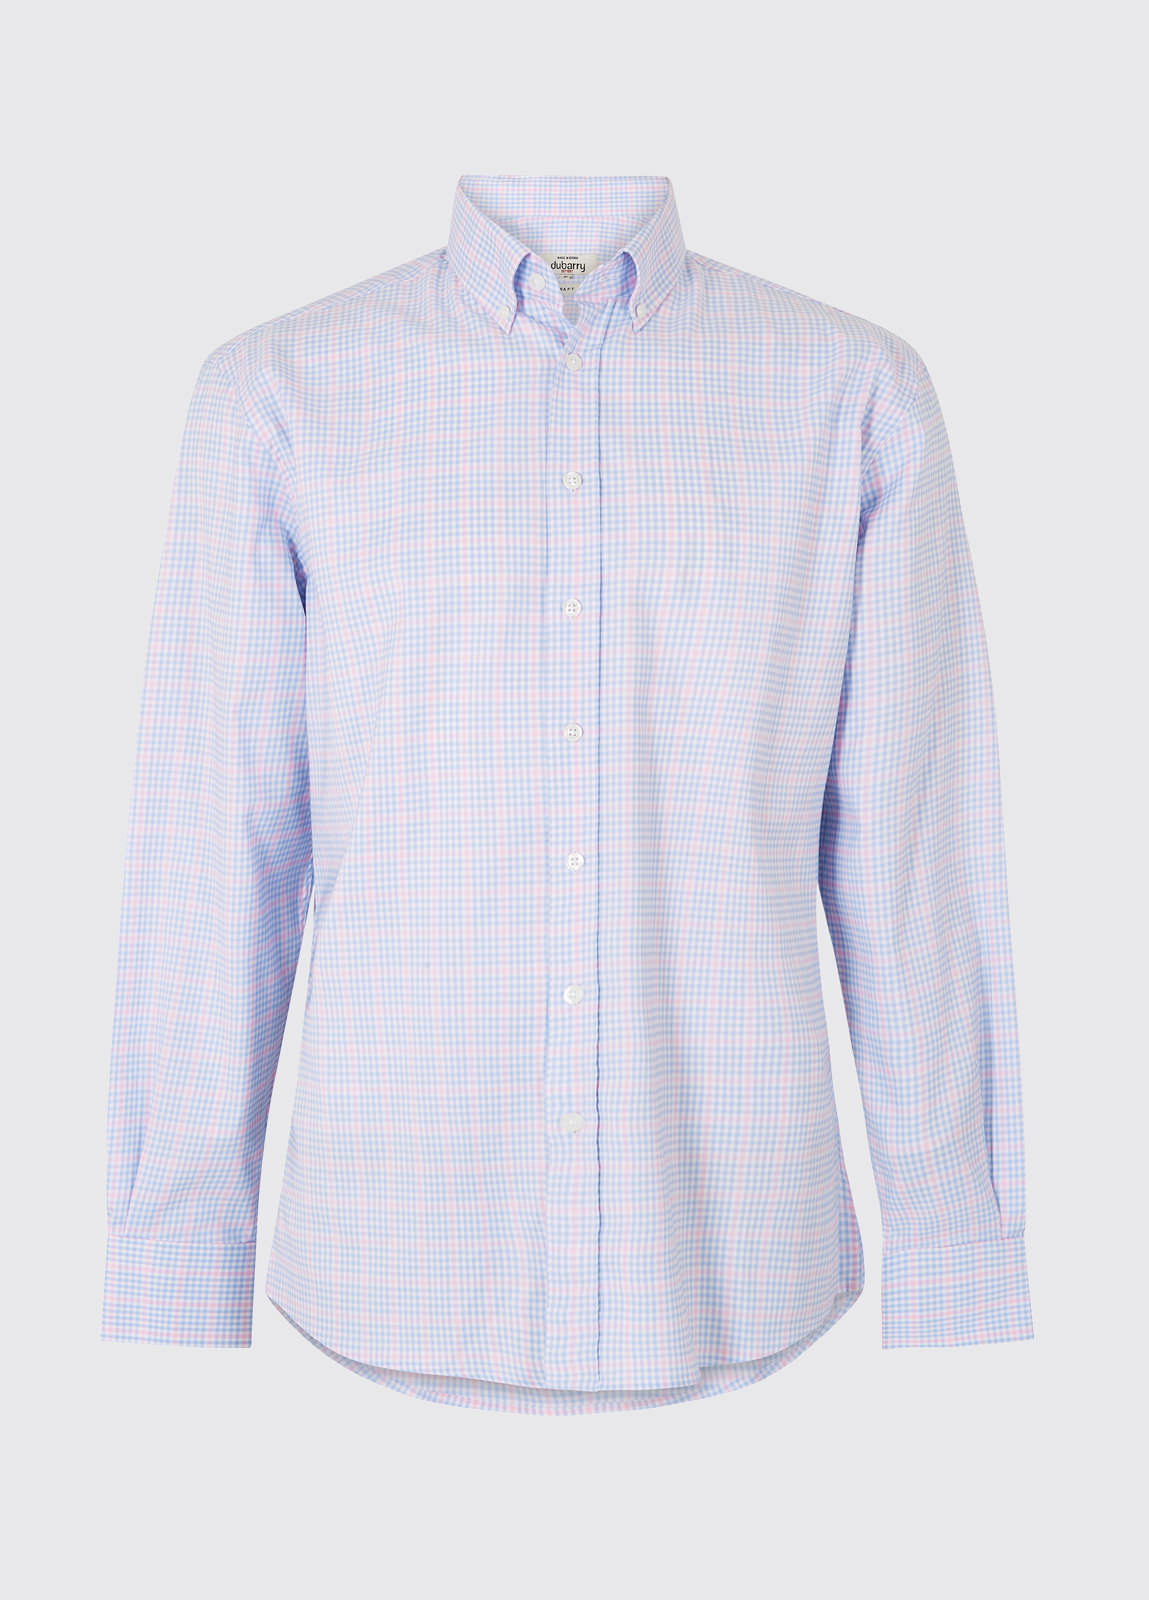 Killiney Shirt - Blue Multi - Size Medium